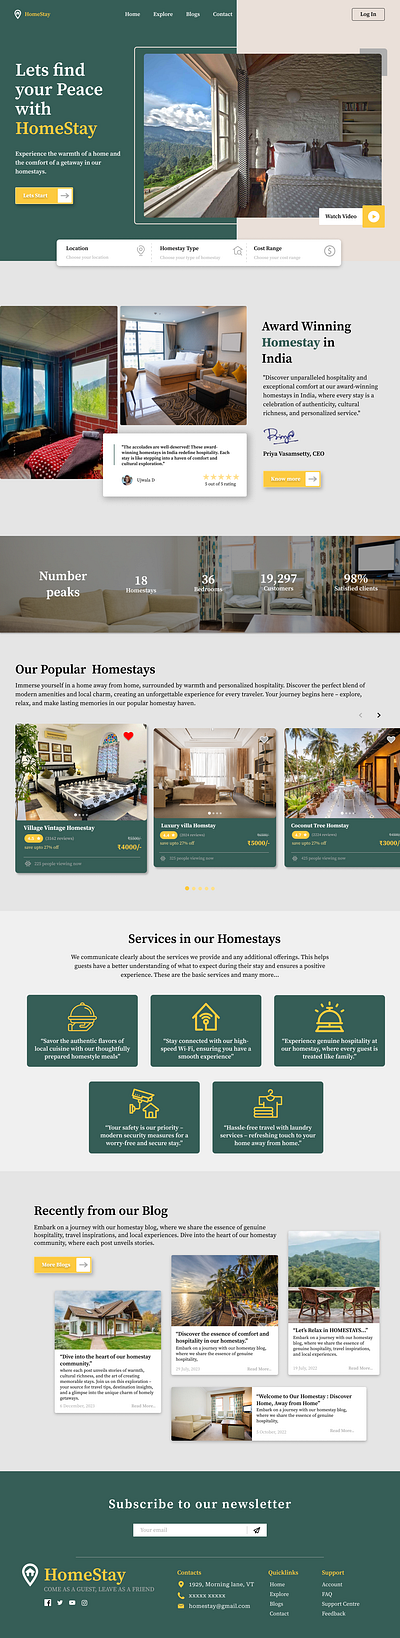 Homest airbnb website creative web d design inspriration figma homestay ui uiux websire designing website inspiration